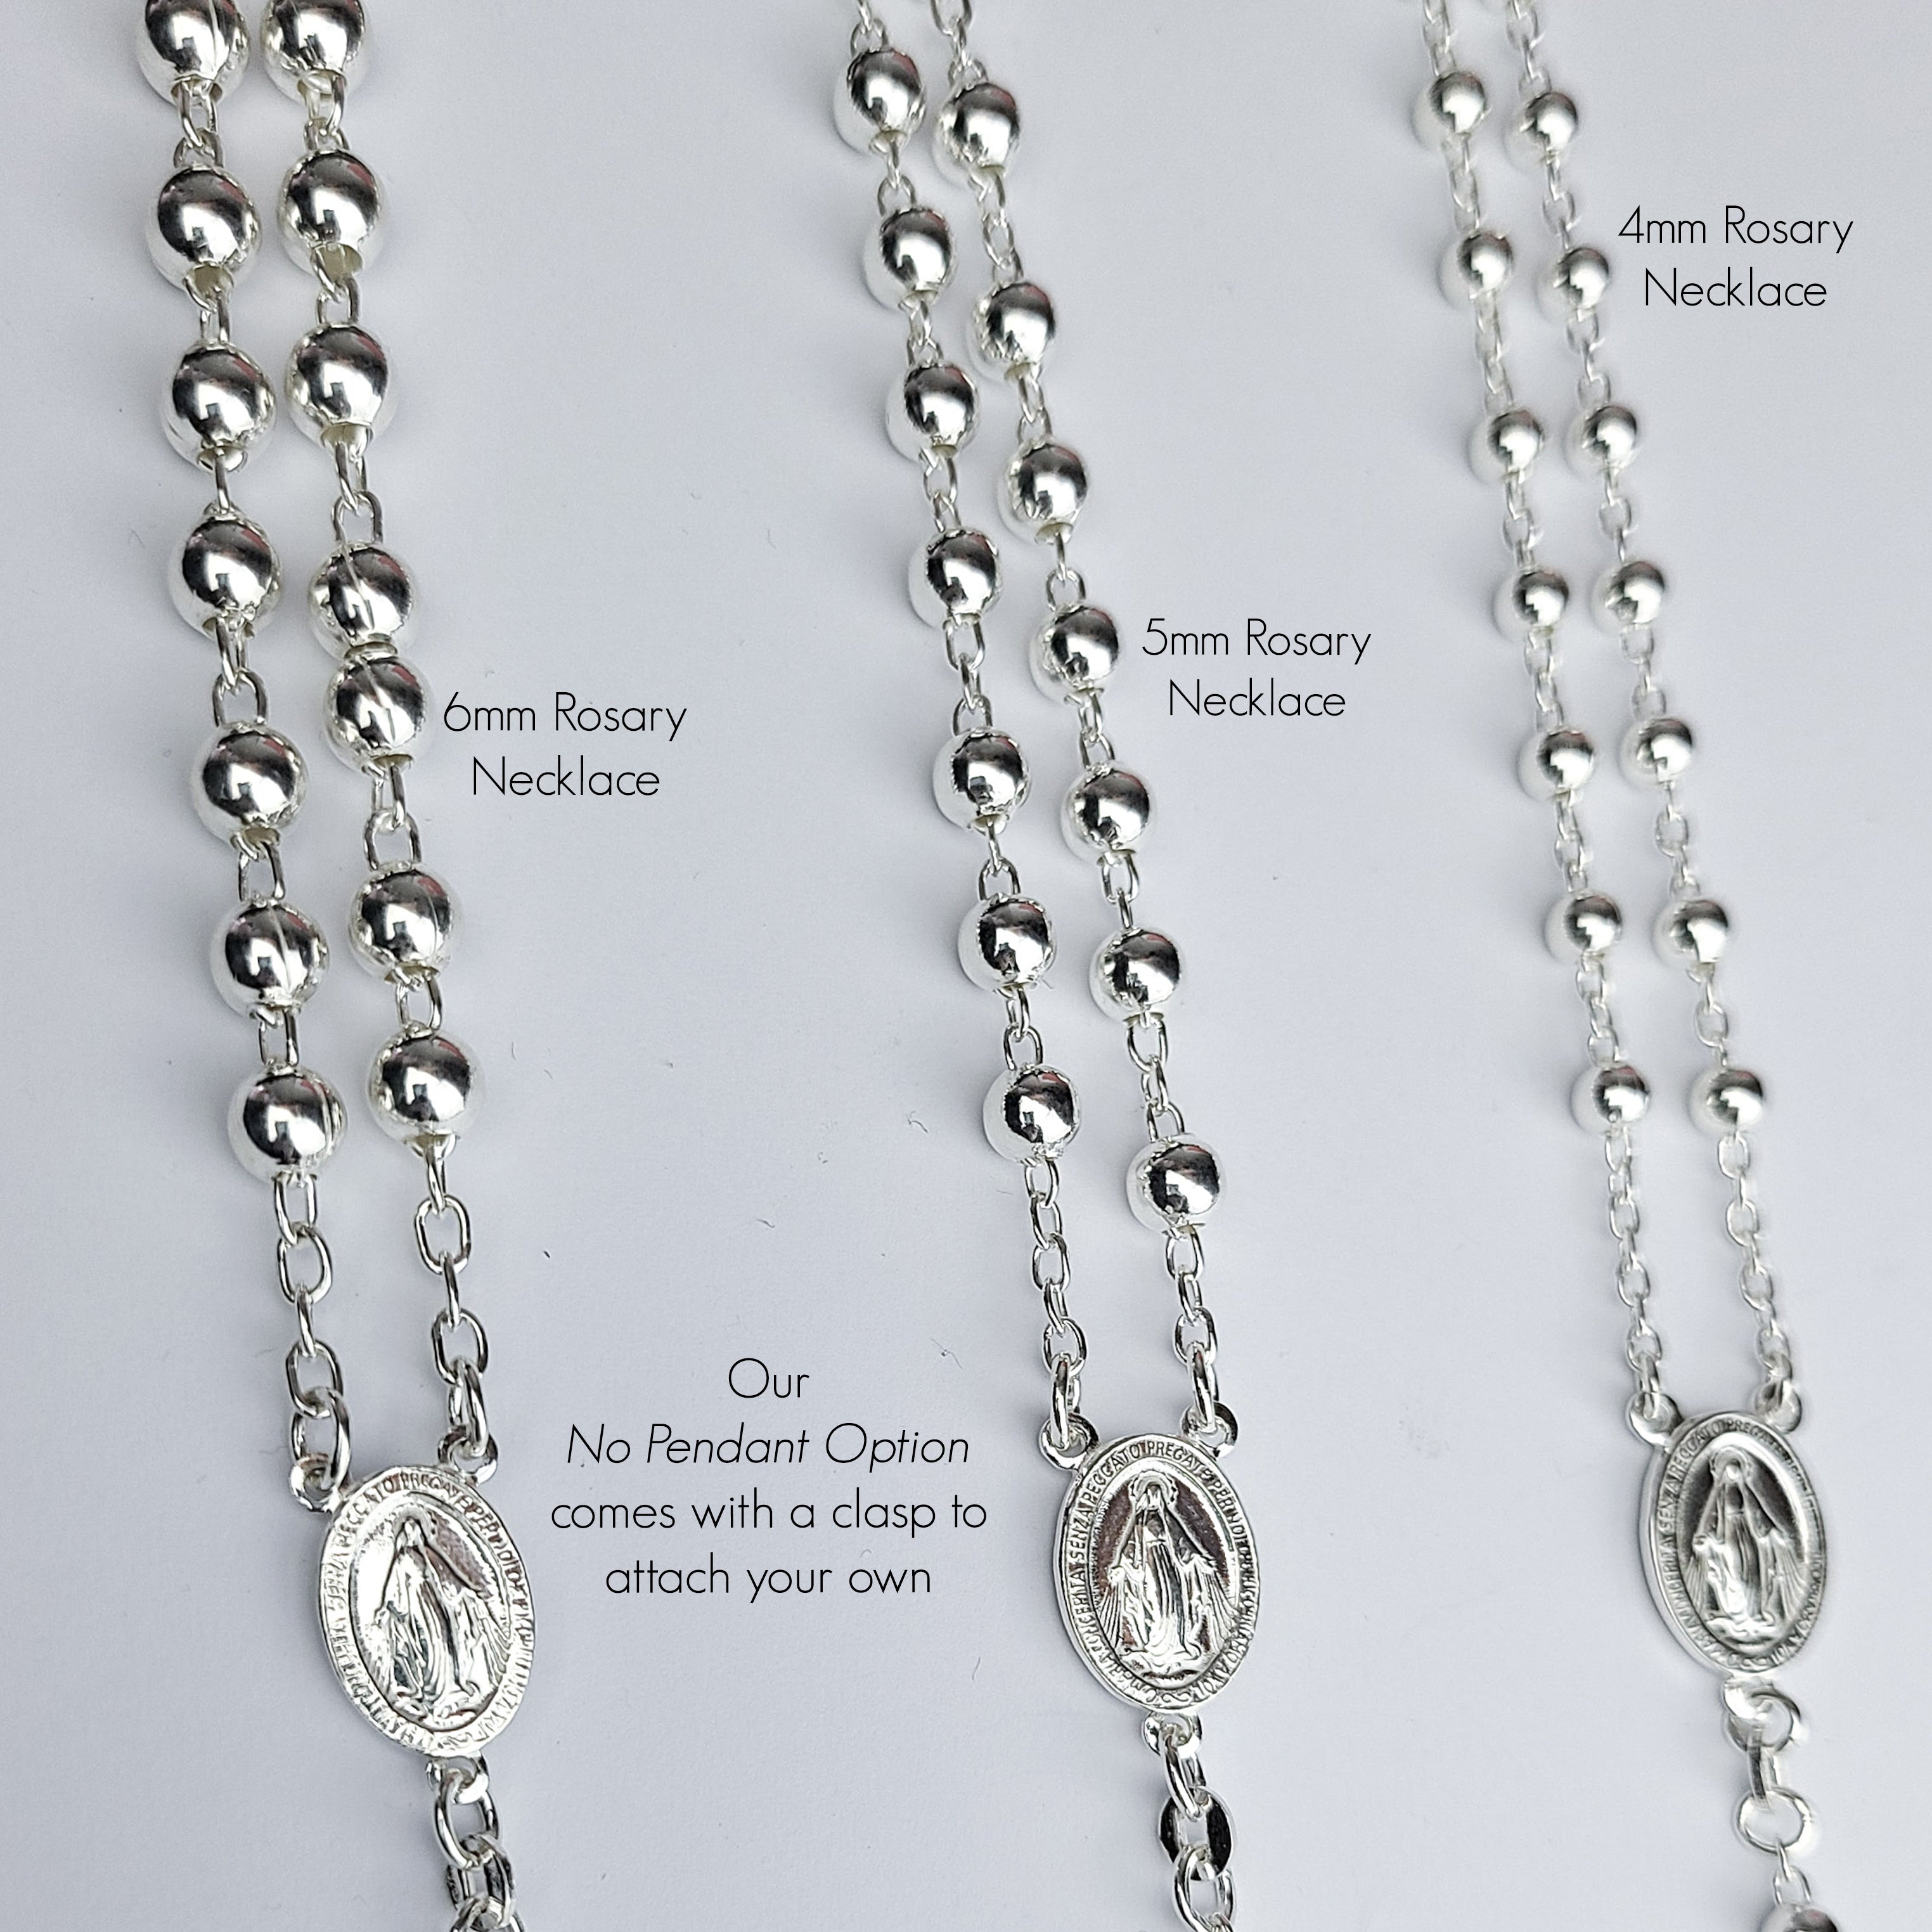 4mm Rosary Prayer Bead Necklace